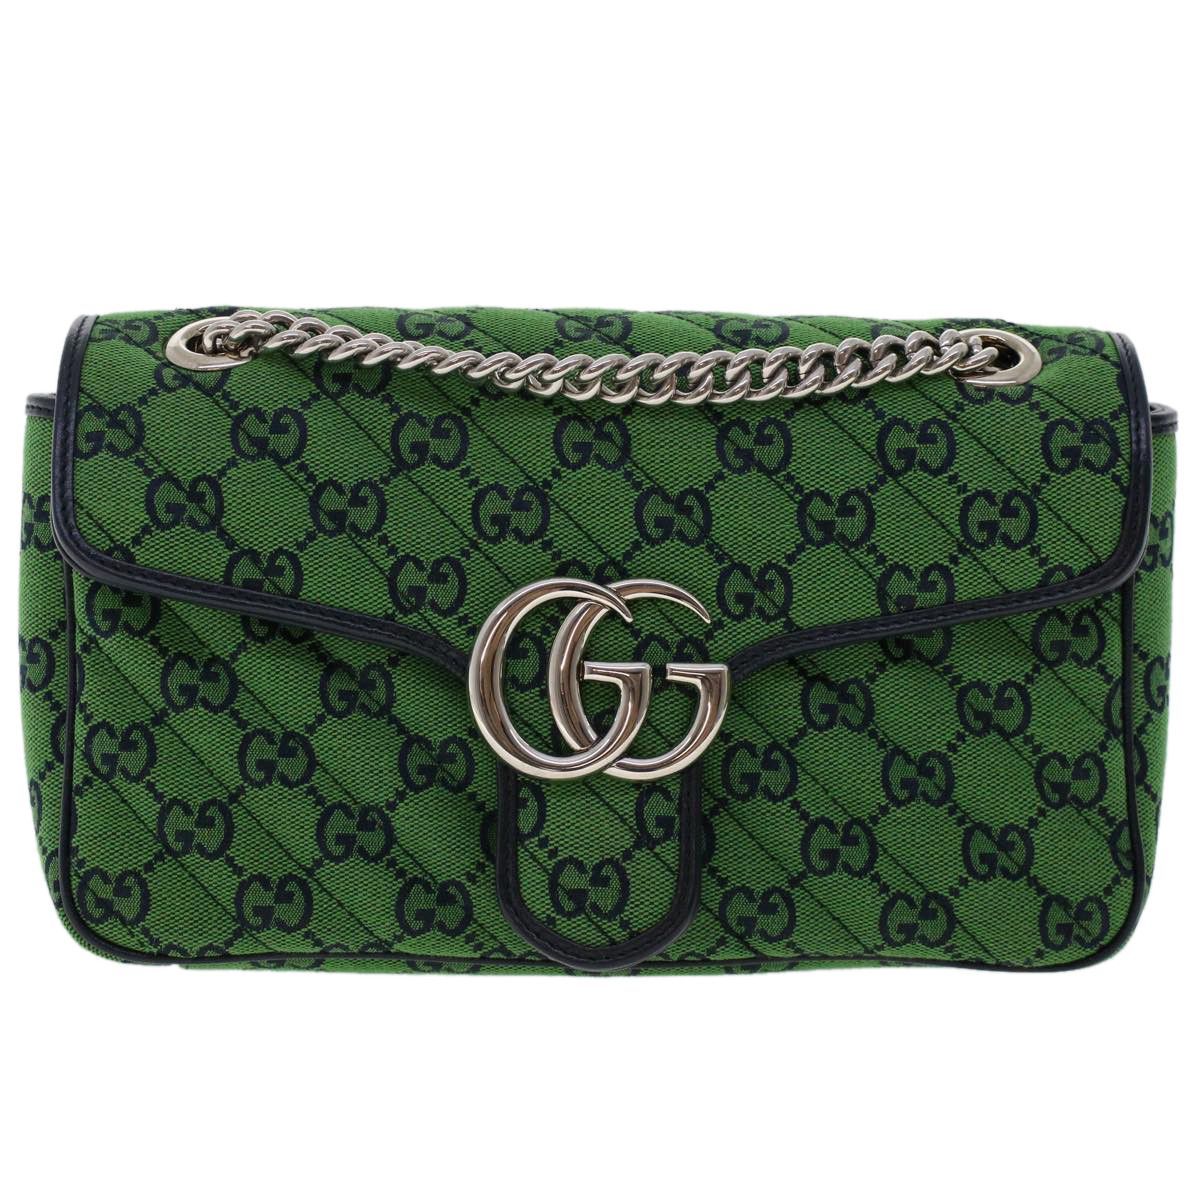 Gucci Gucci GG Marmont shoulder | Grailed | Grailed